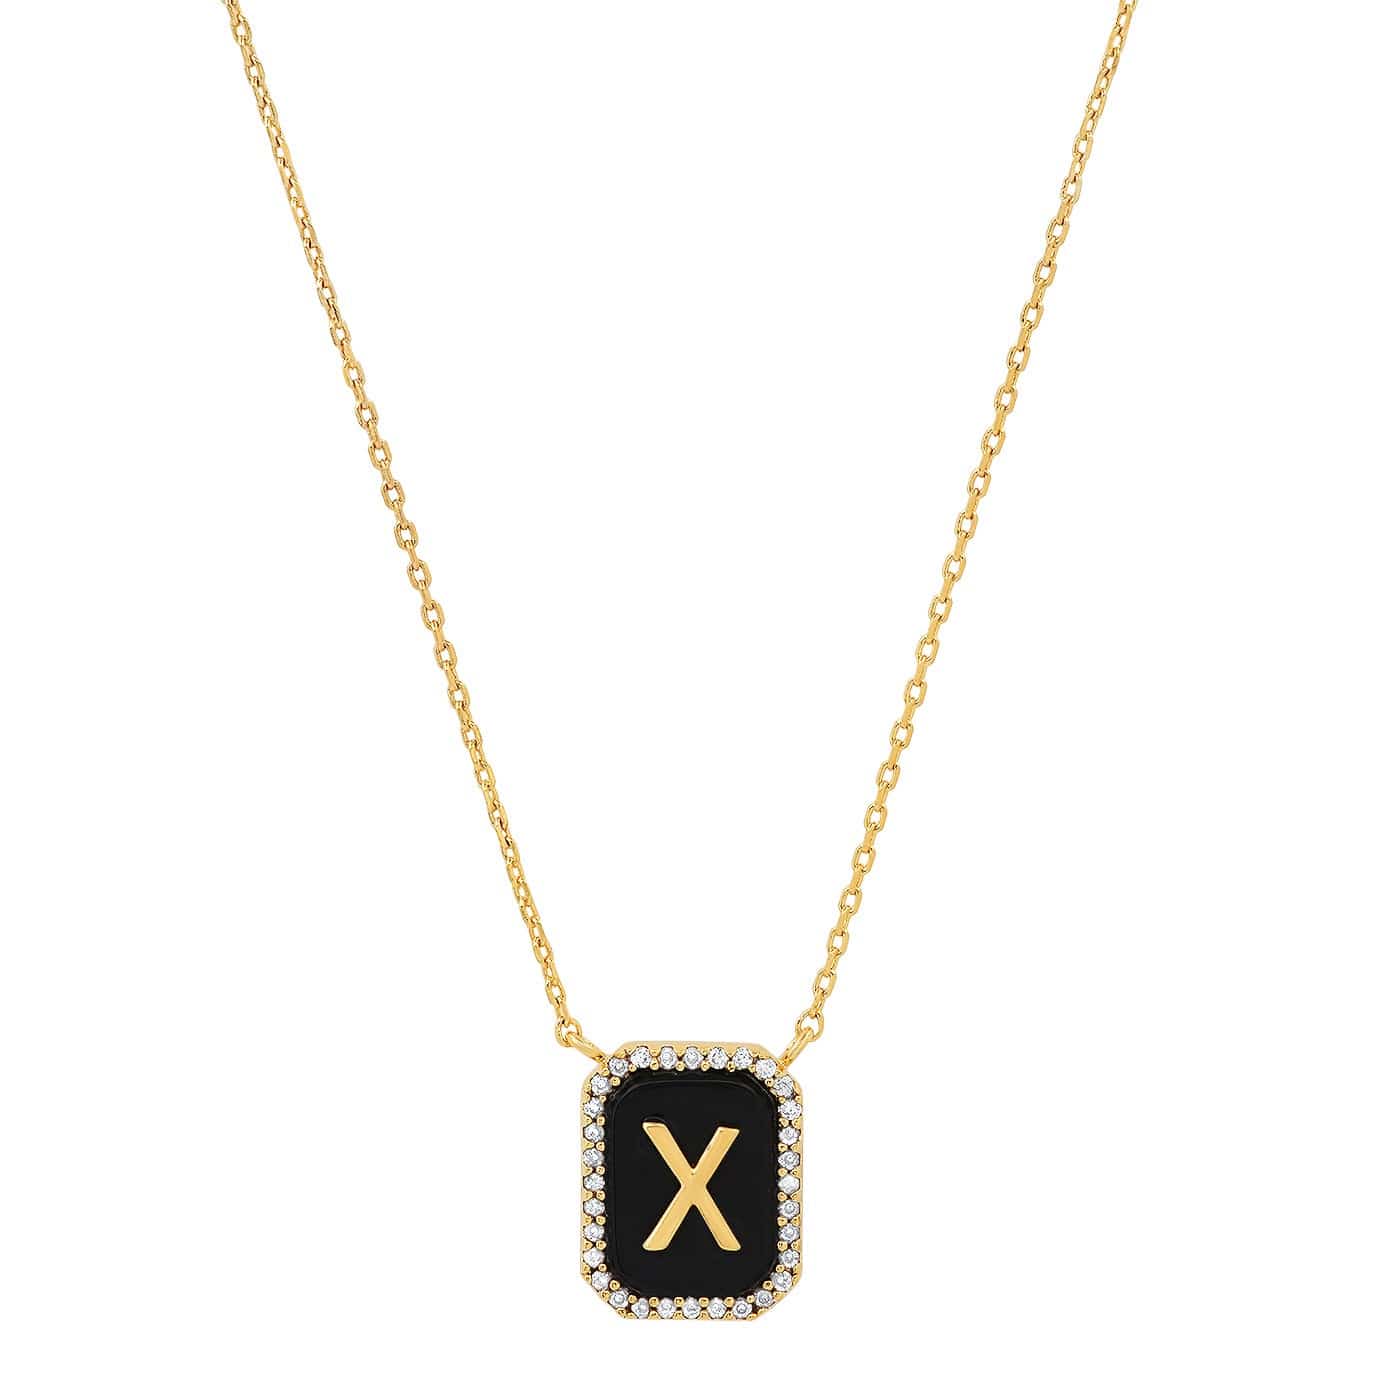 TAI JEWELRY Necklace X Onyx Monogram Pendant Necklace